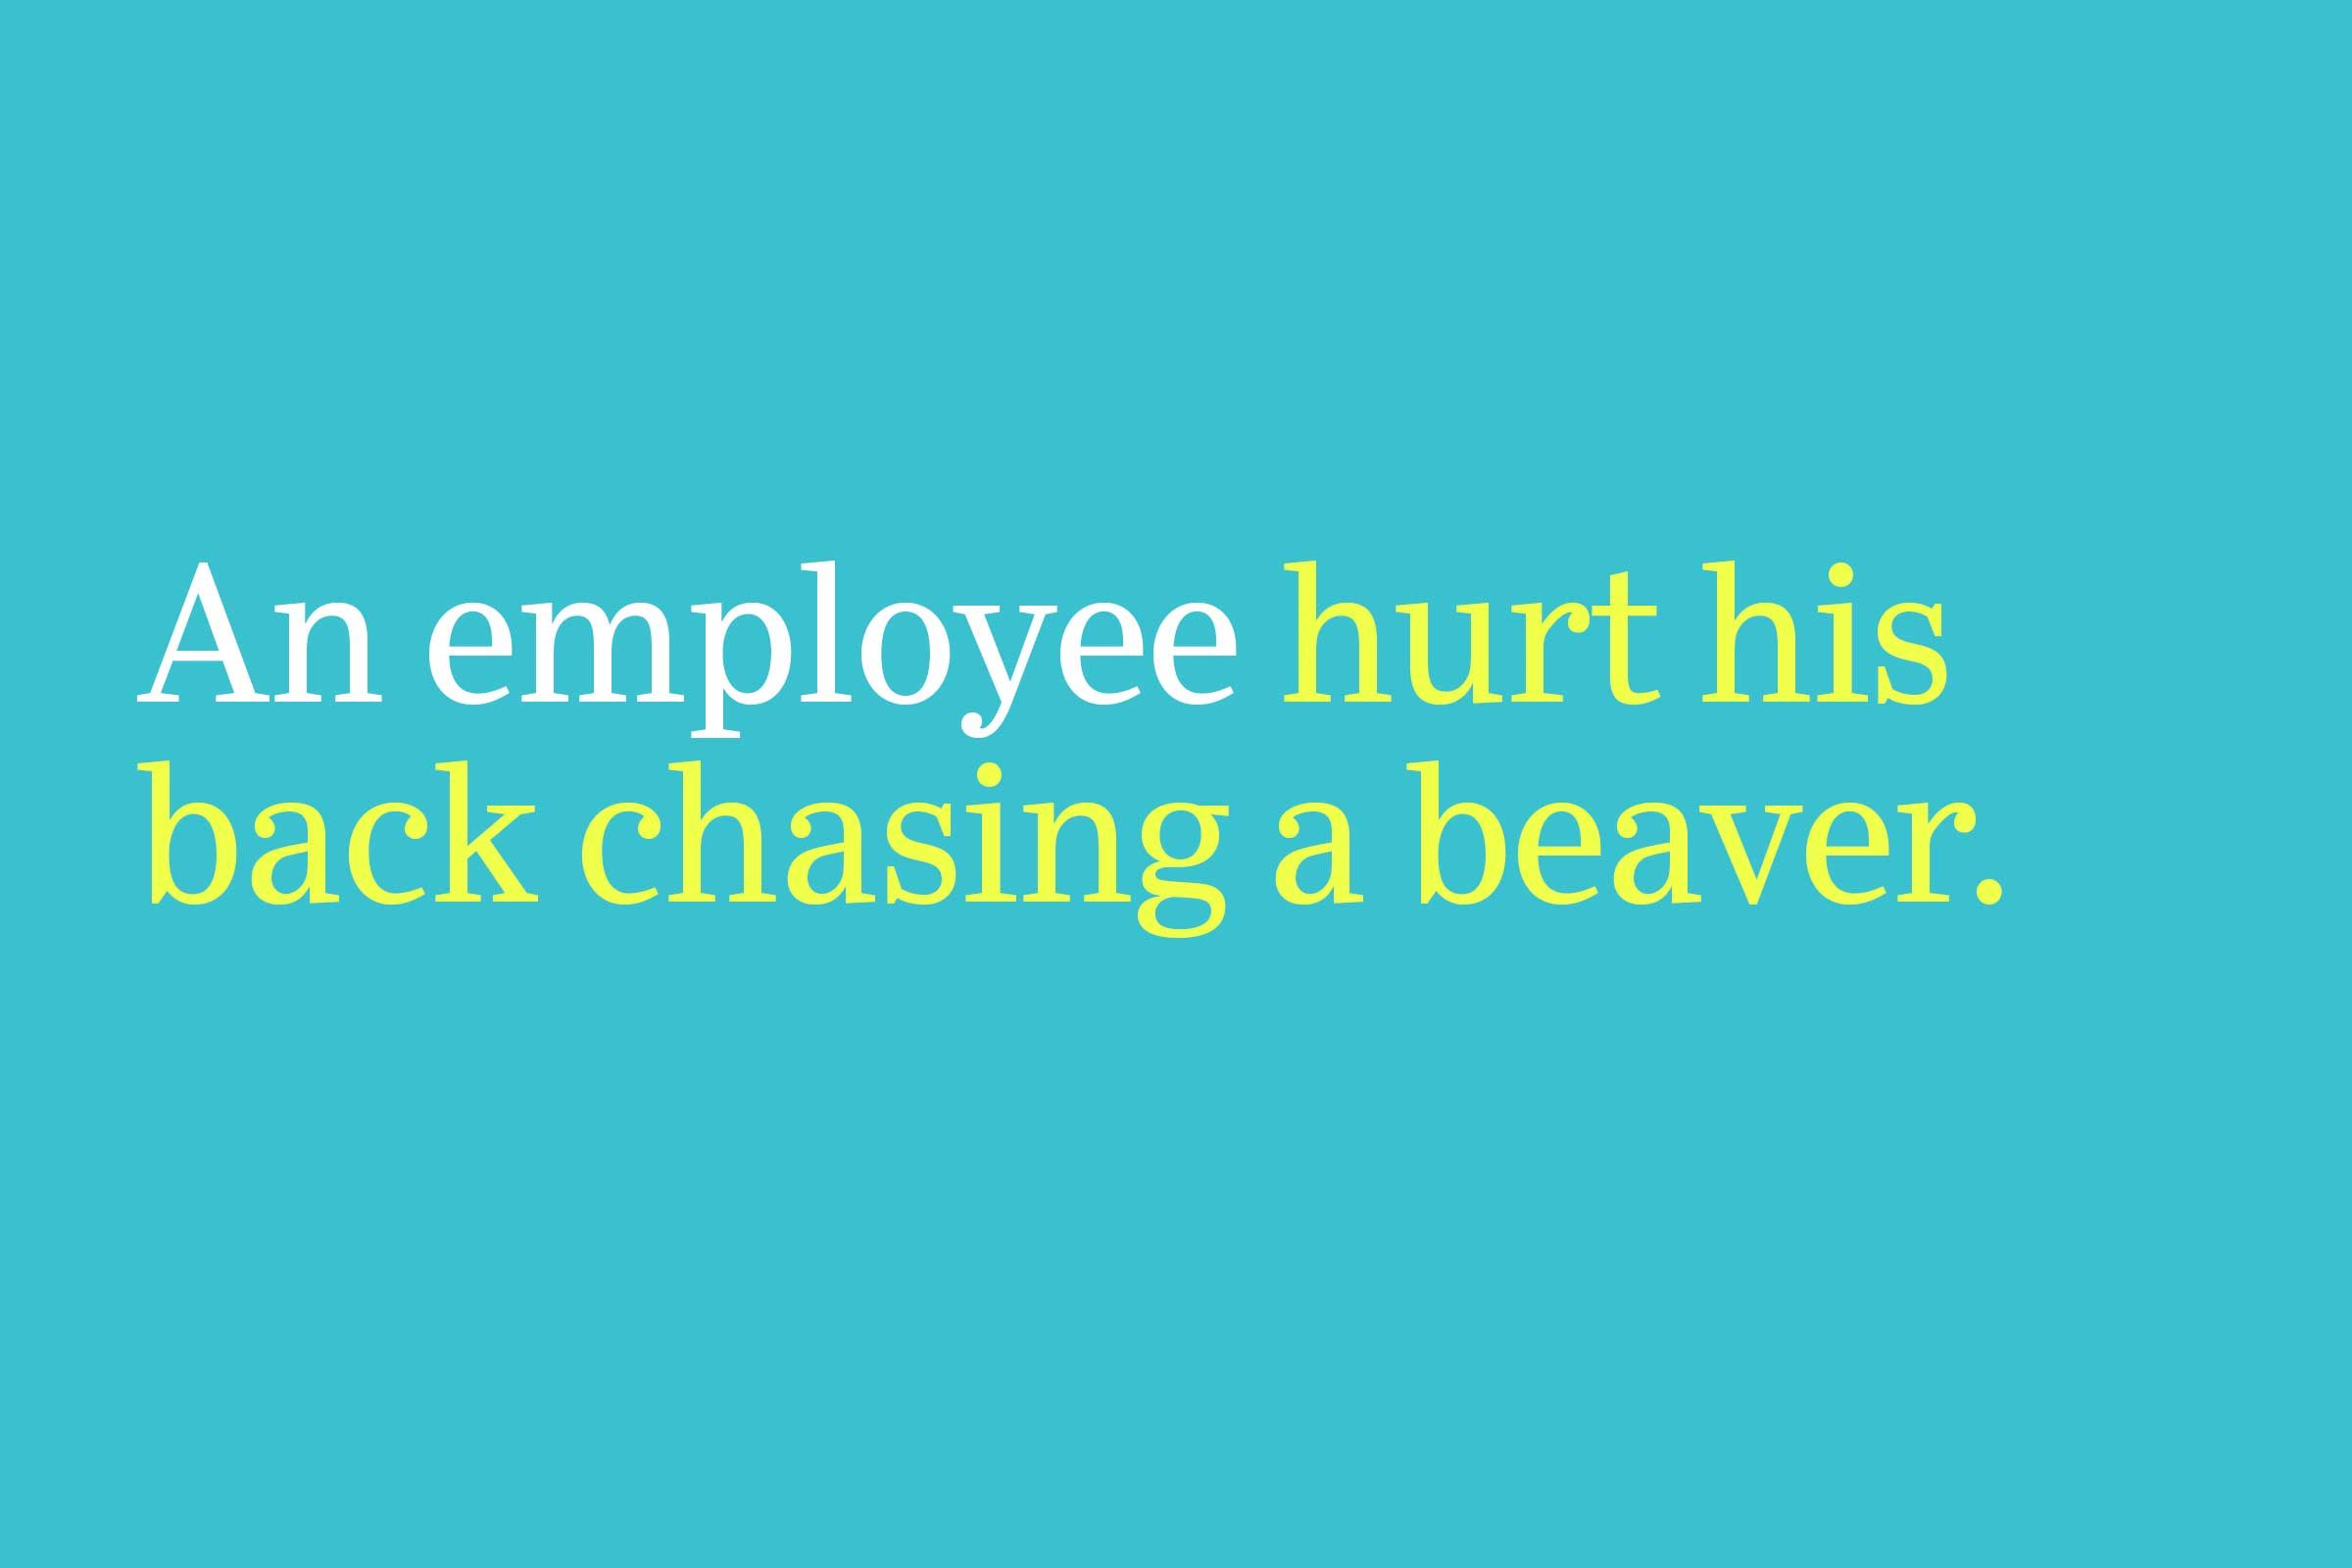 hurt his back chasing a beaver